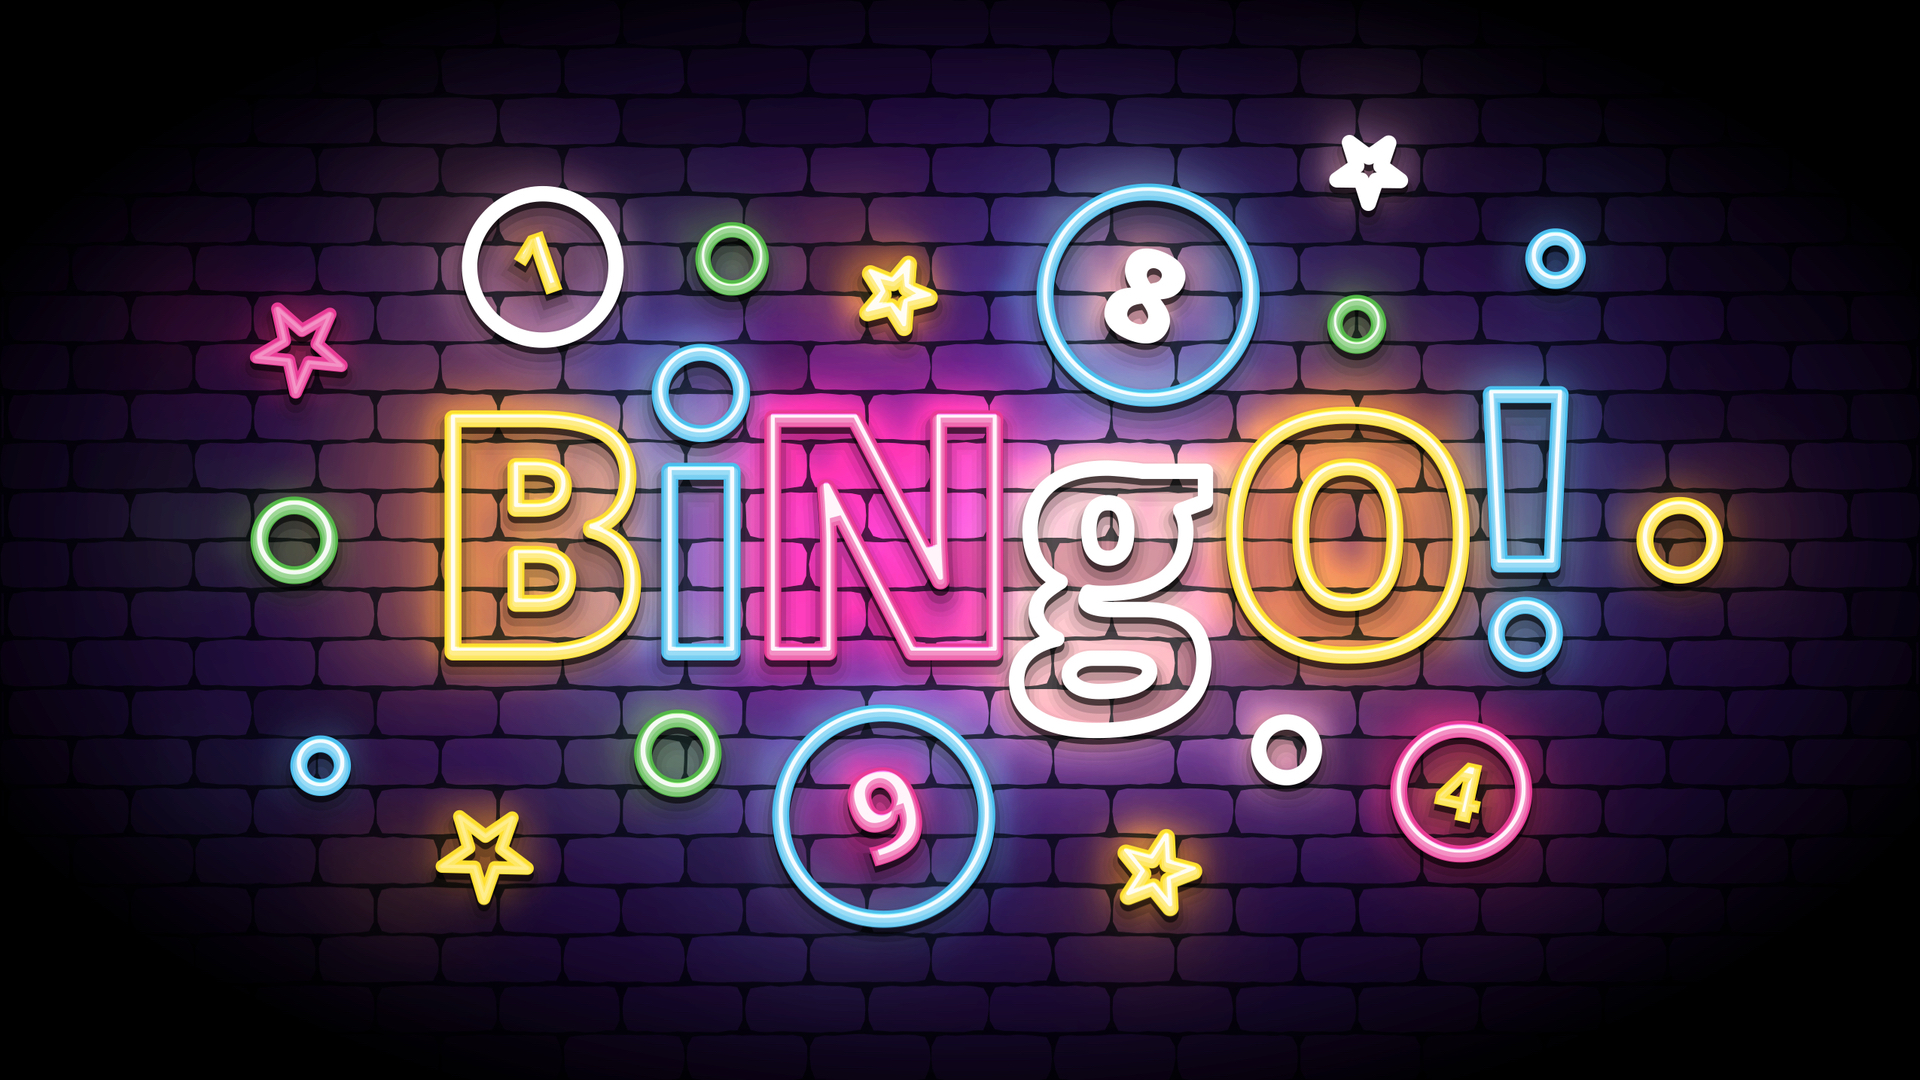 Neon sign bingo graphic